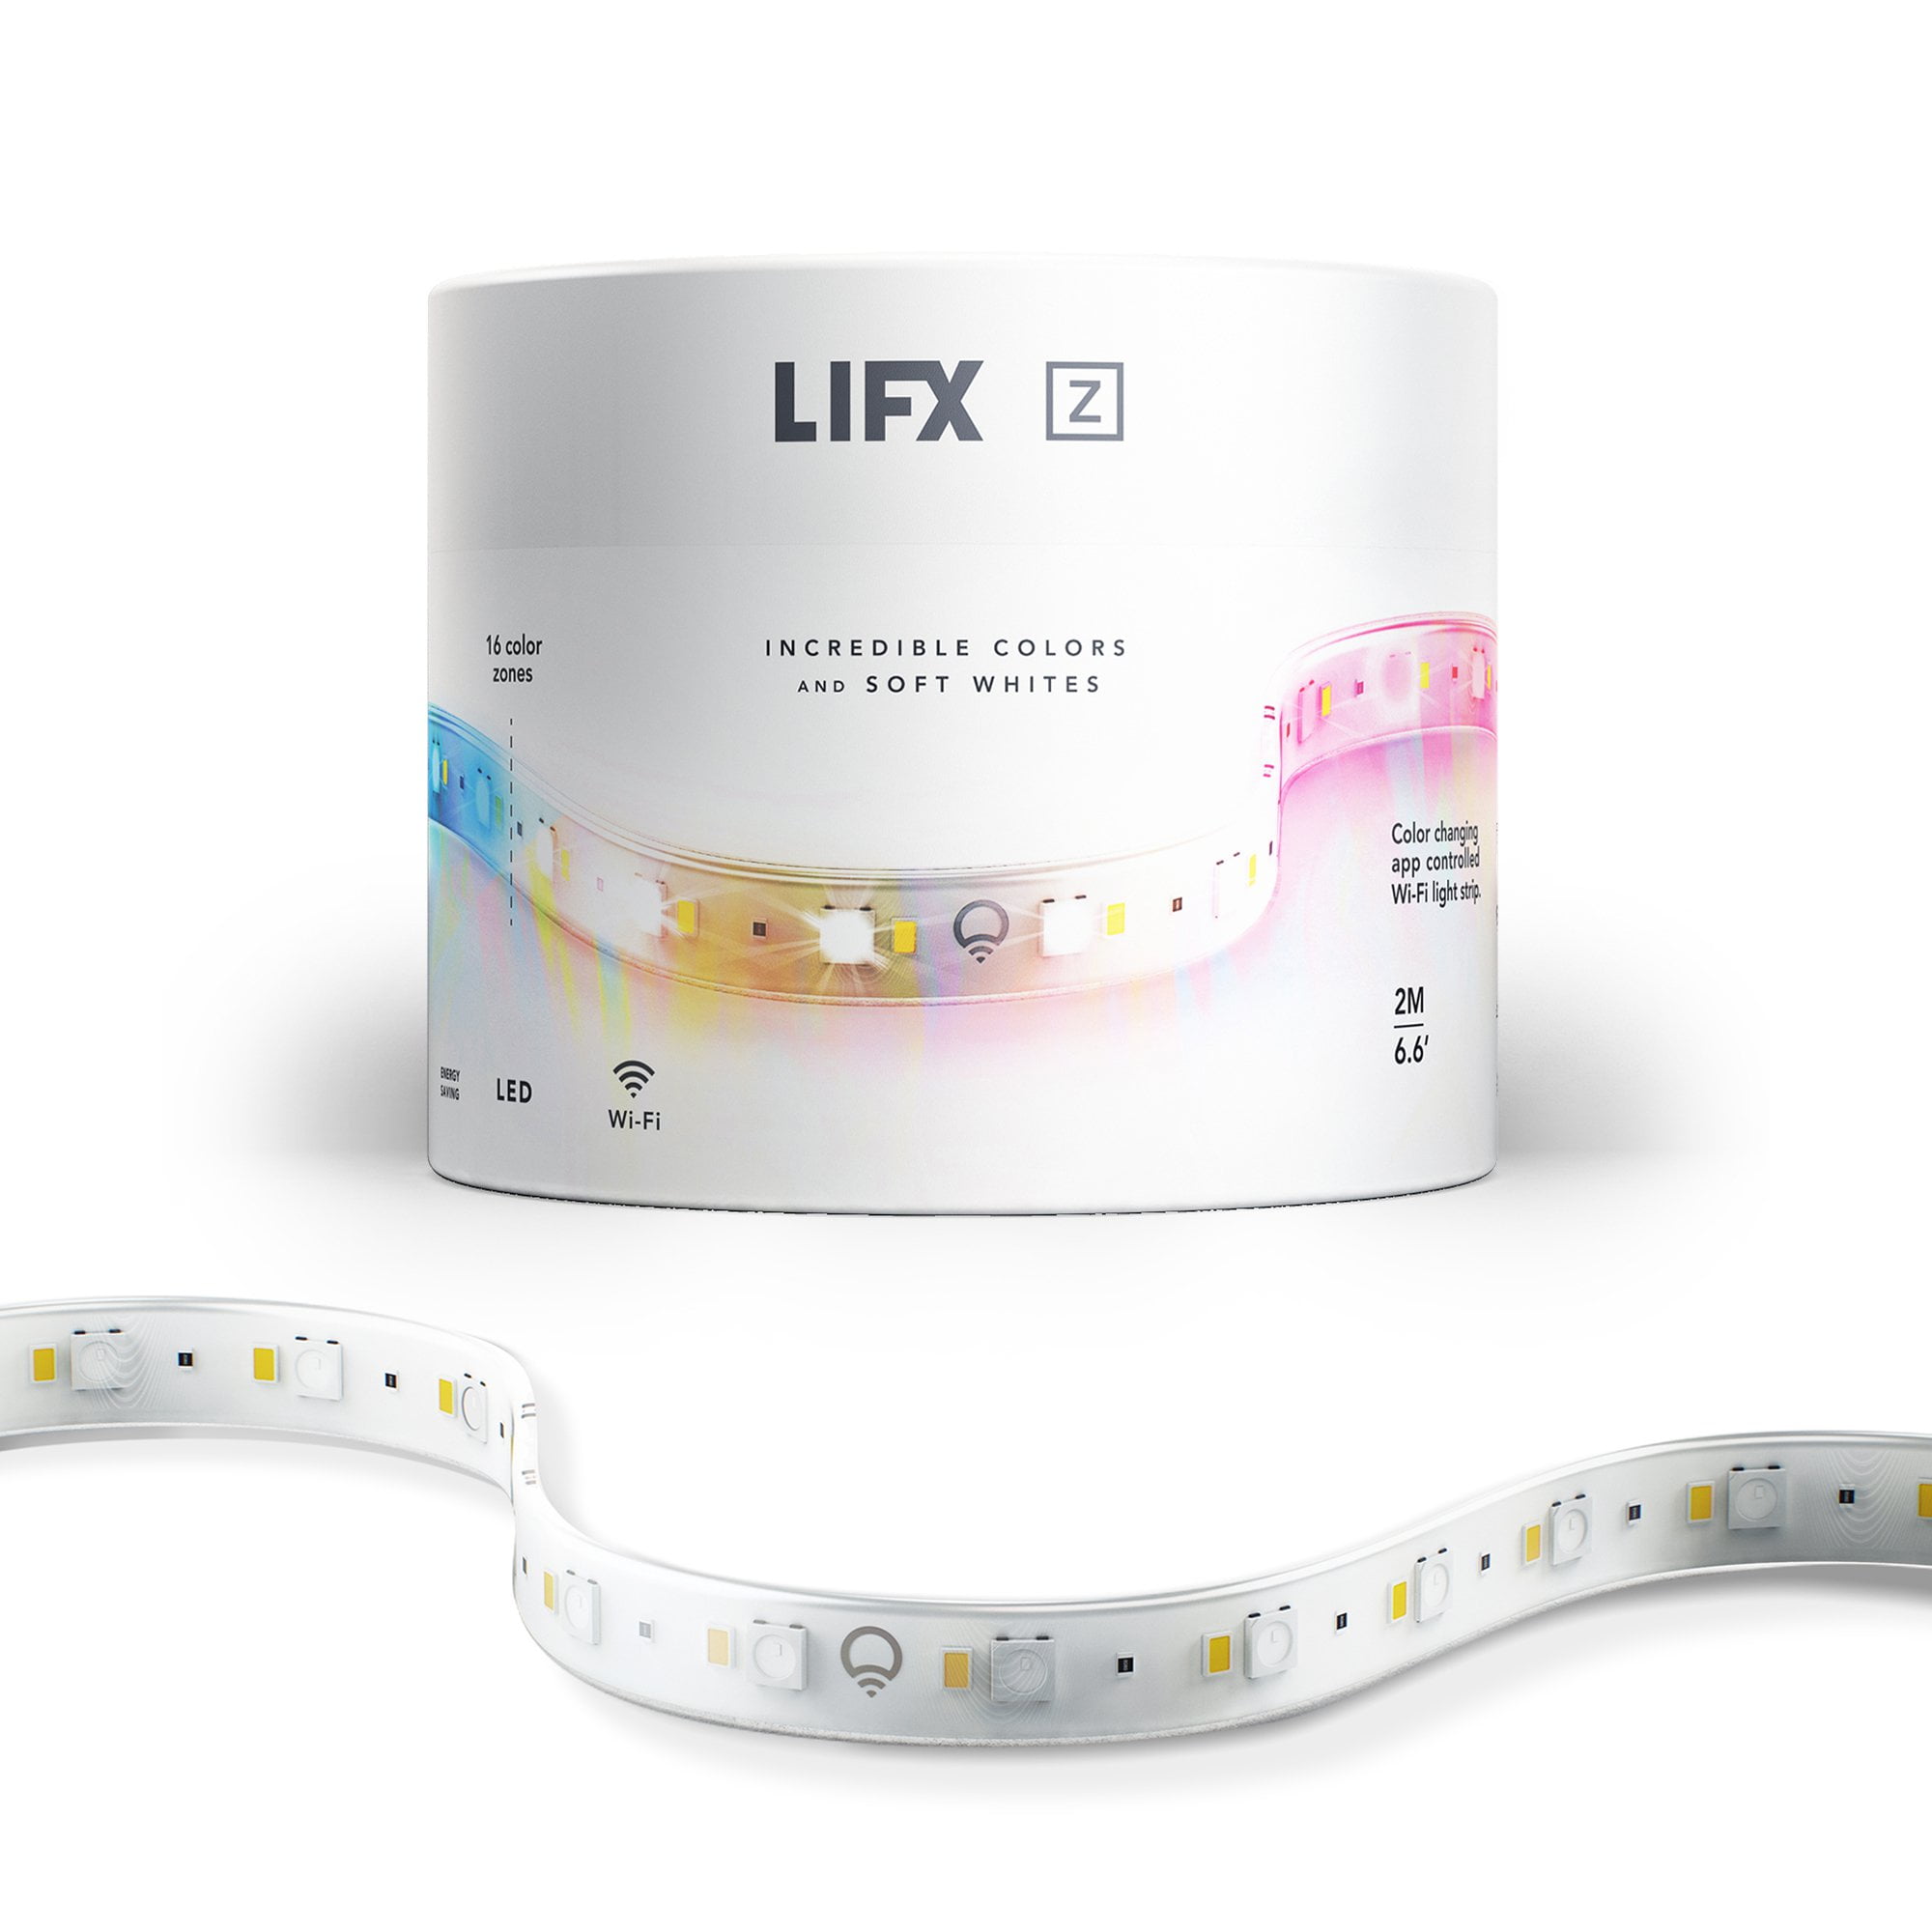 LIFX Z WiFi Dimmable Controller and Multi LED Light Strip Starter Kit - Walmart.com